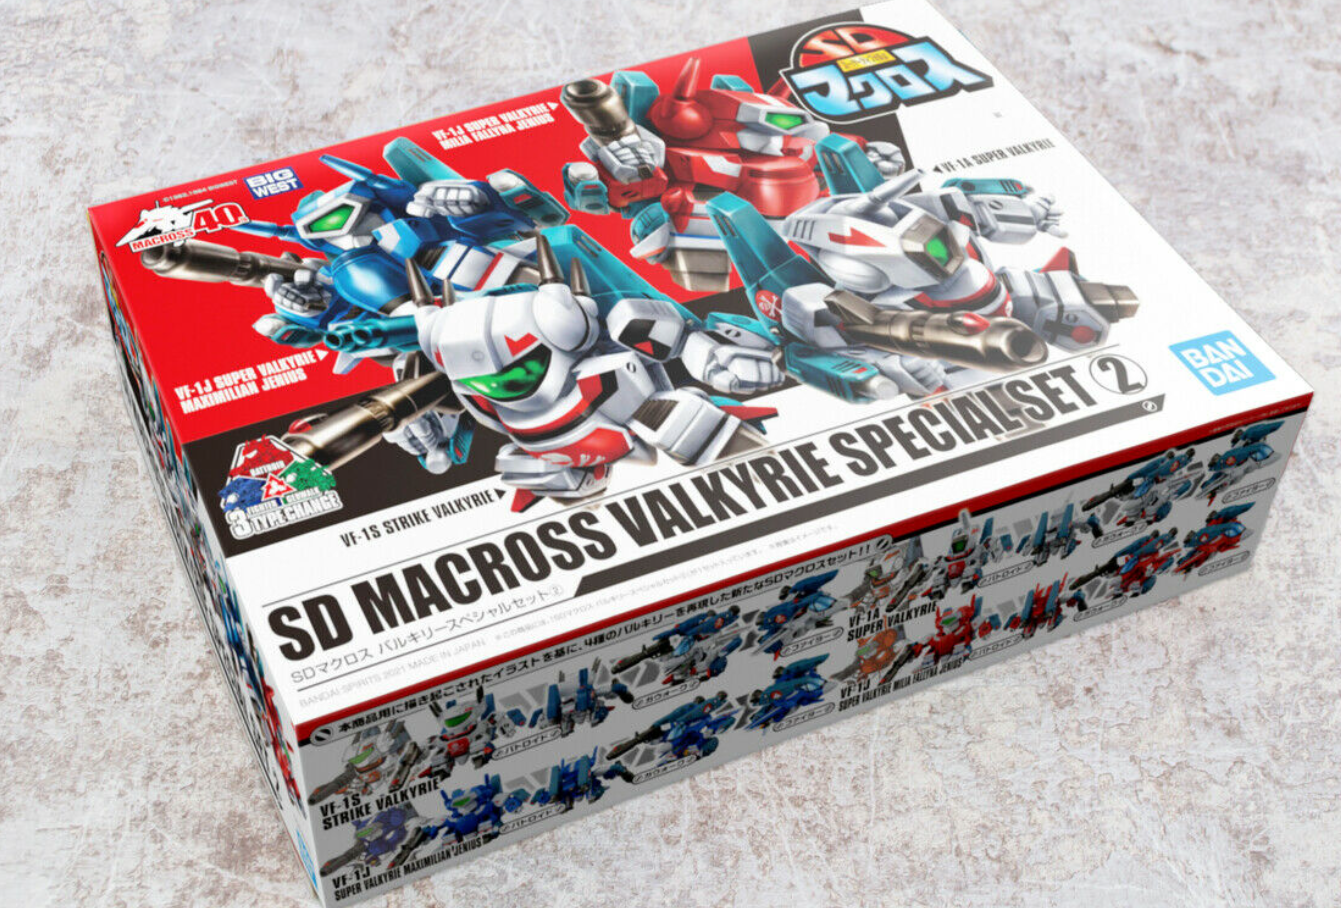 Bandai SD Macross Valkyrie Special Set - Model kits - Macross 